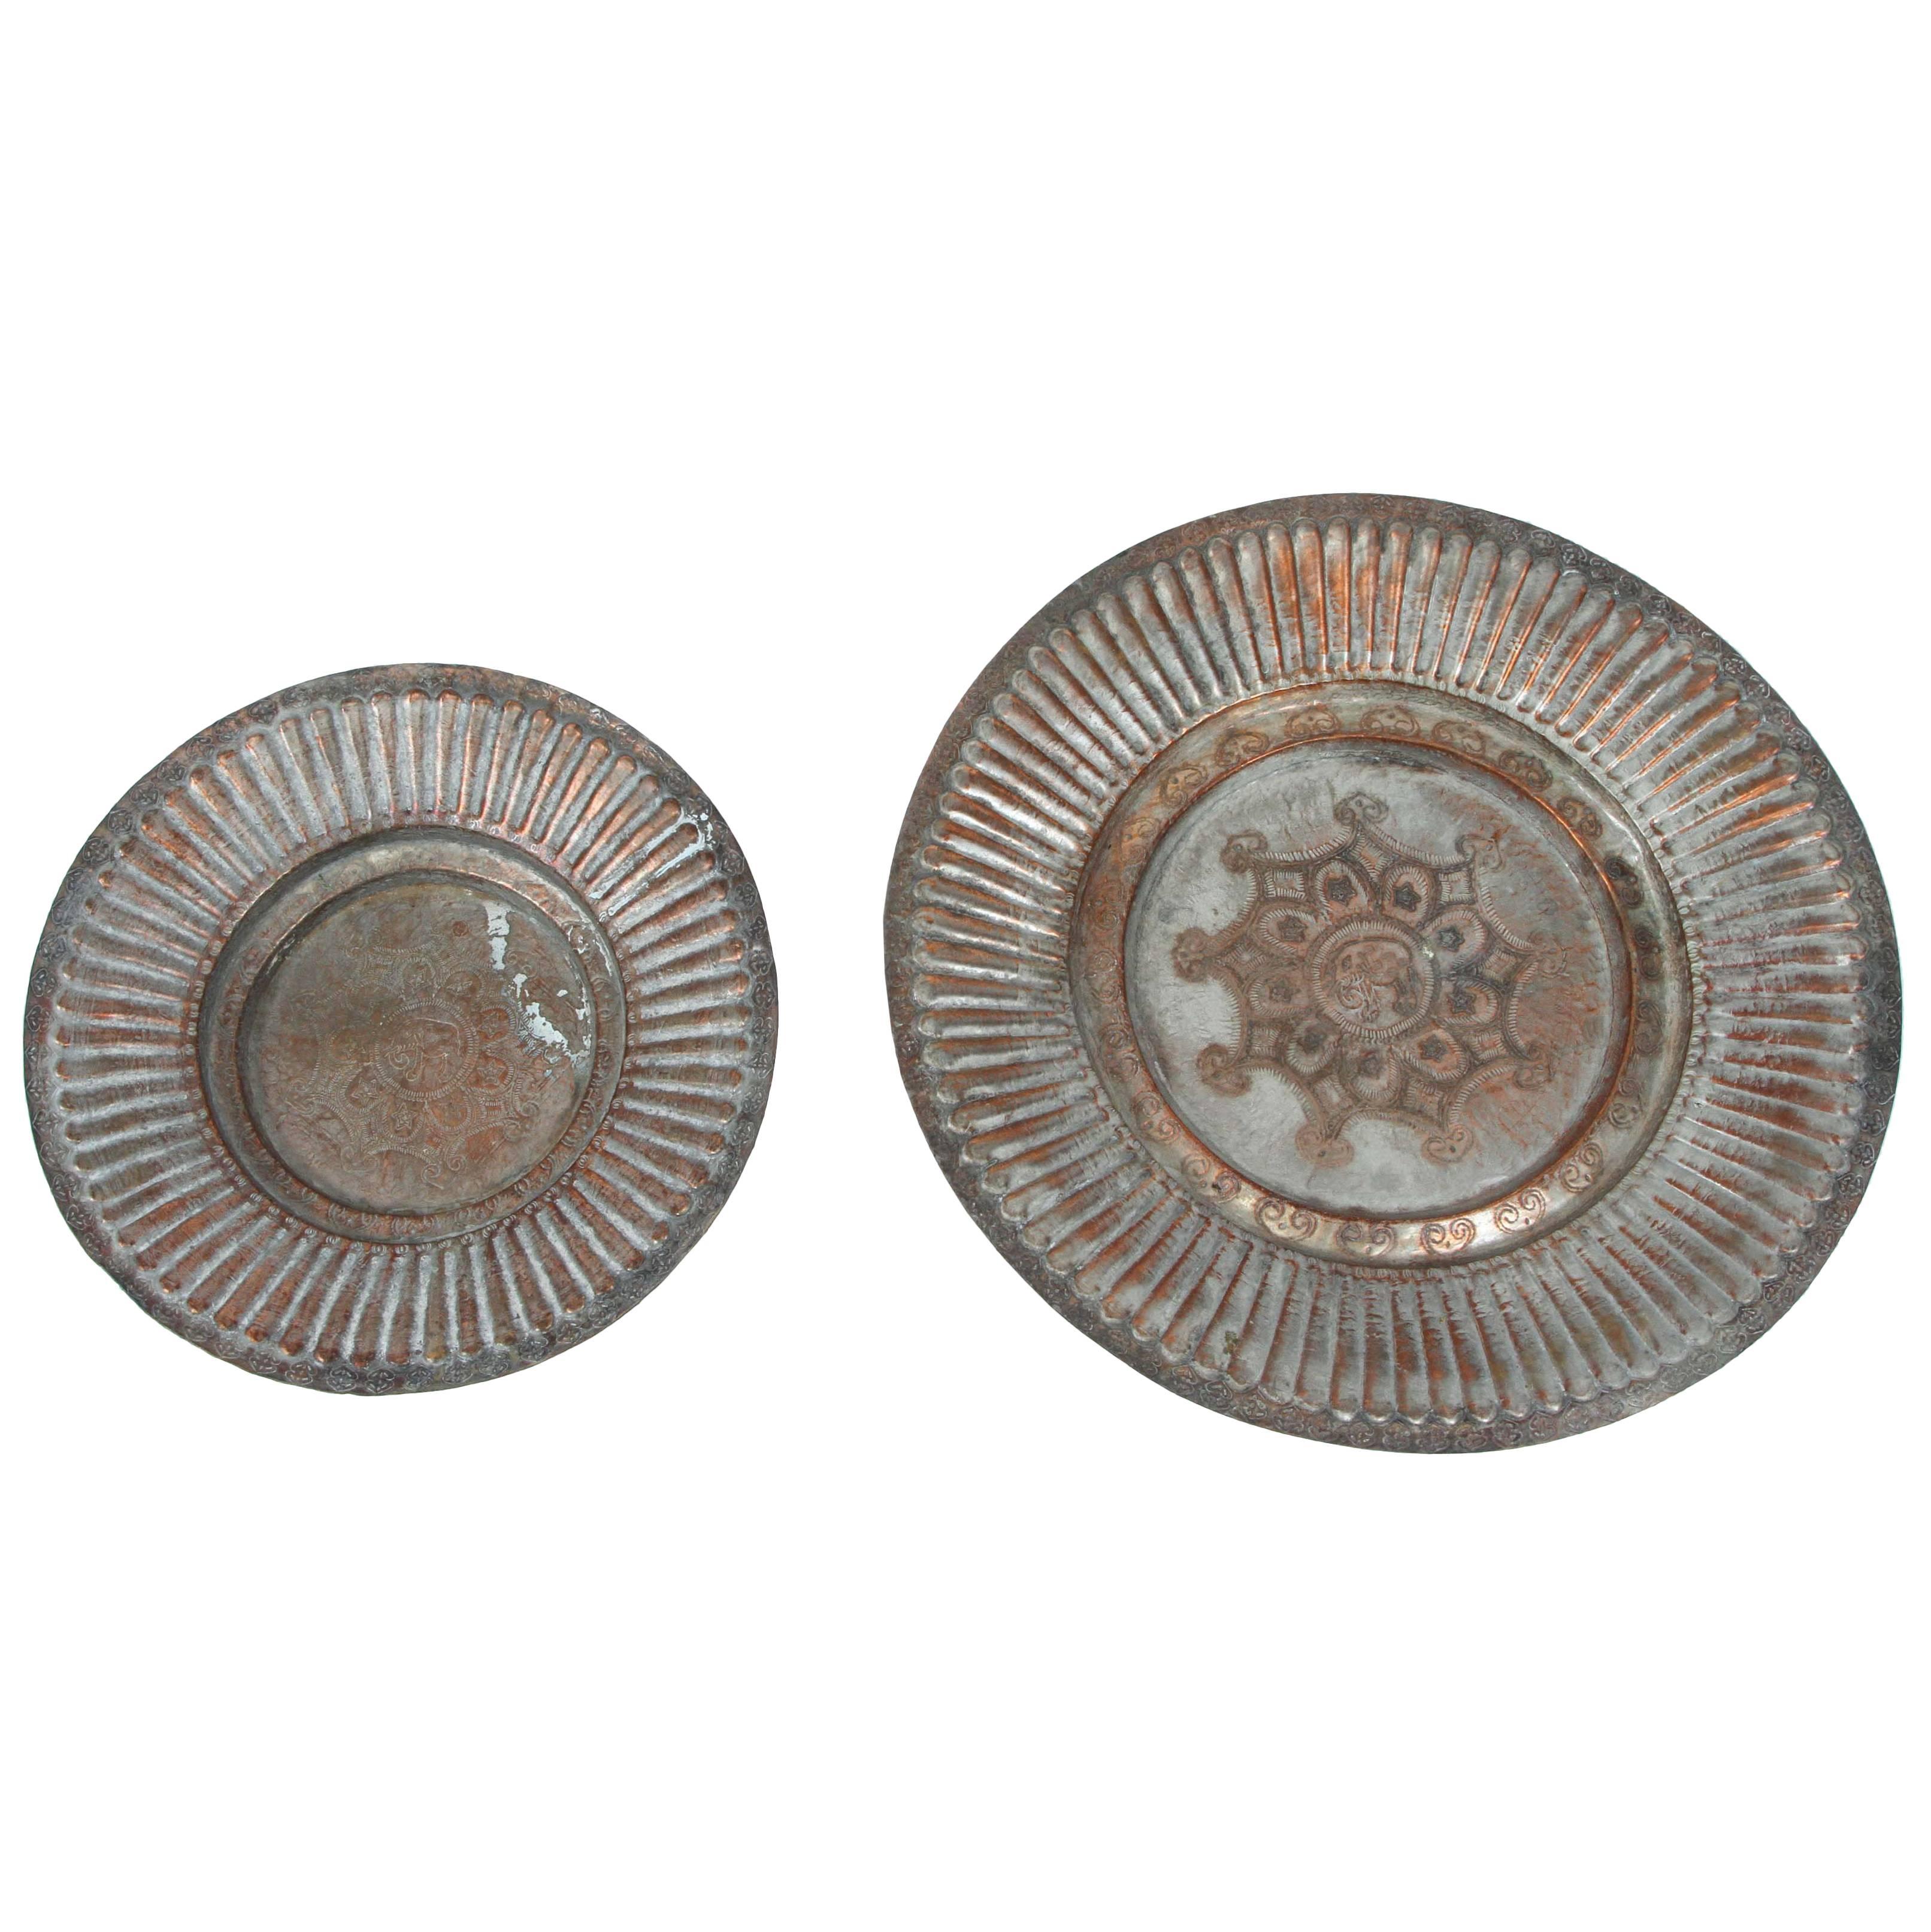 Pair of Tinned Copper Rajasthani Hanging Metal Bowls